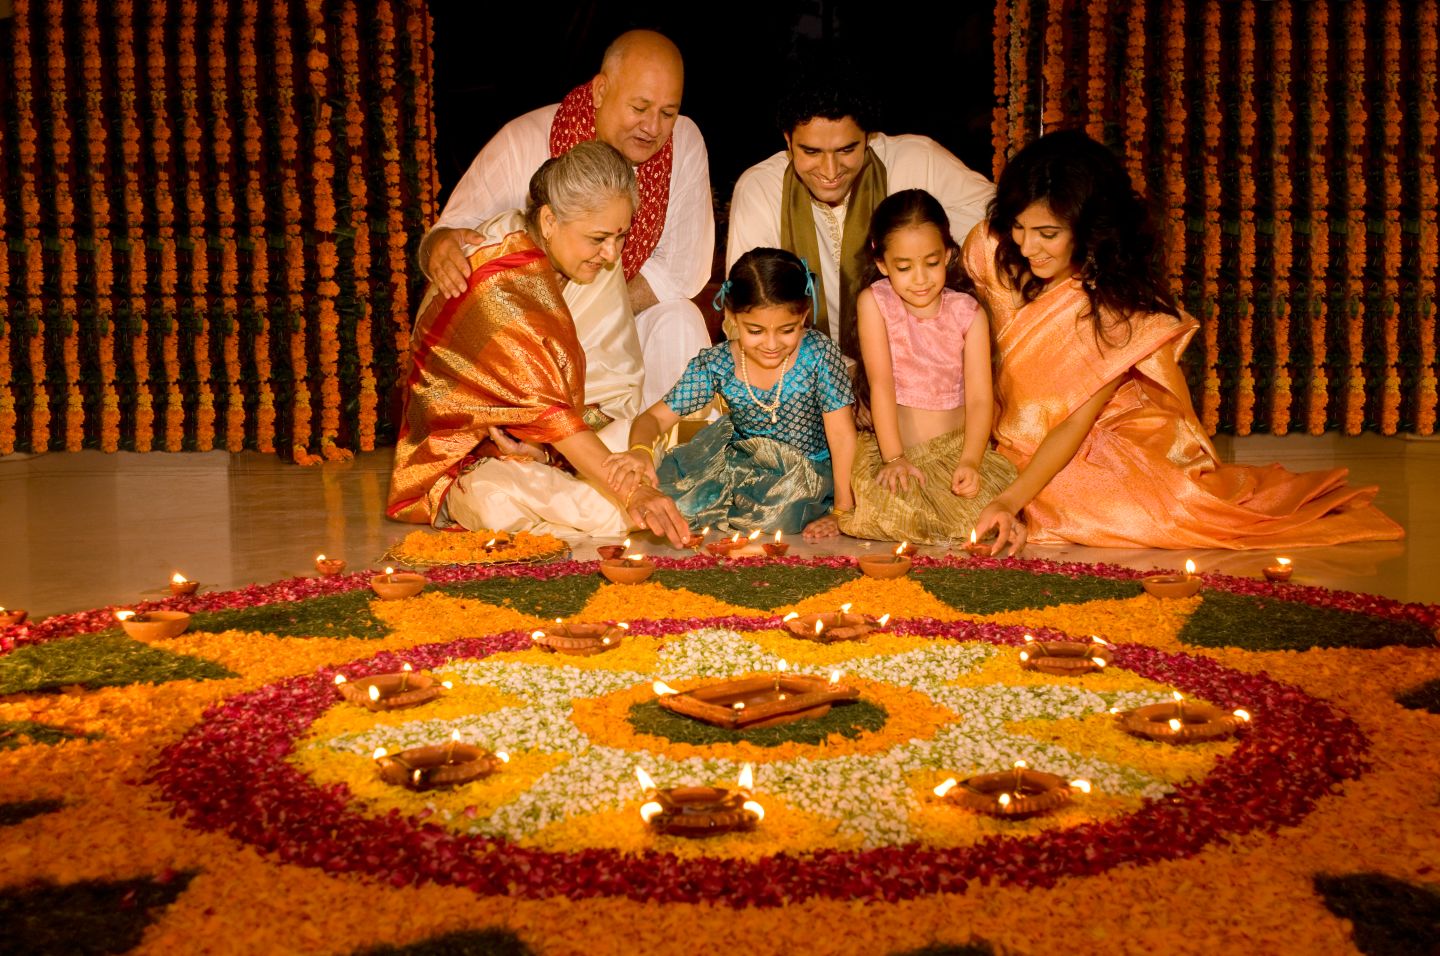 Diwali Celebration in India 2019 - How Diwali is Celebrated in India?